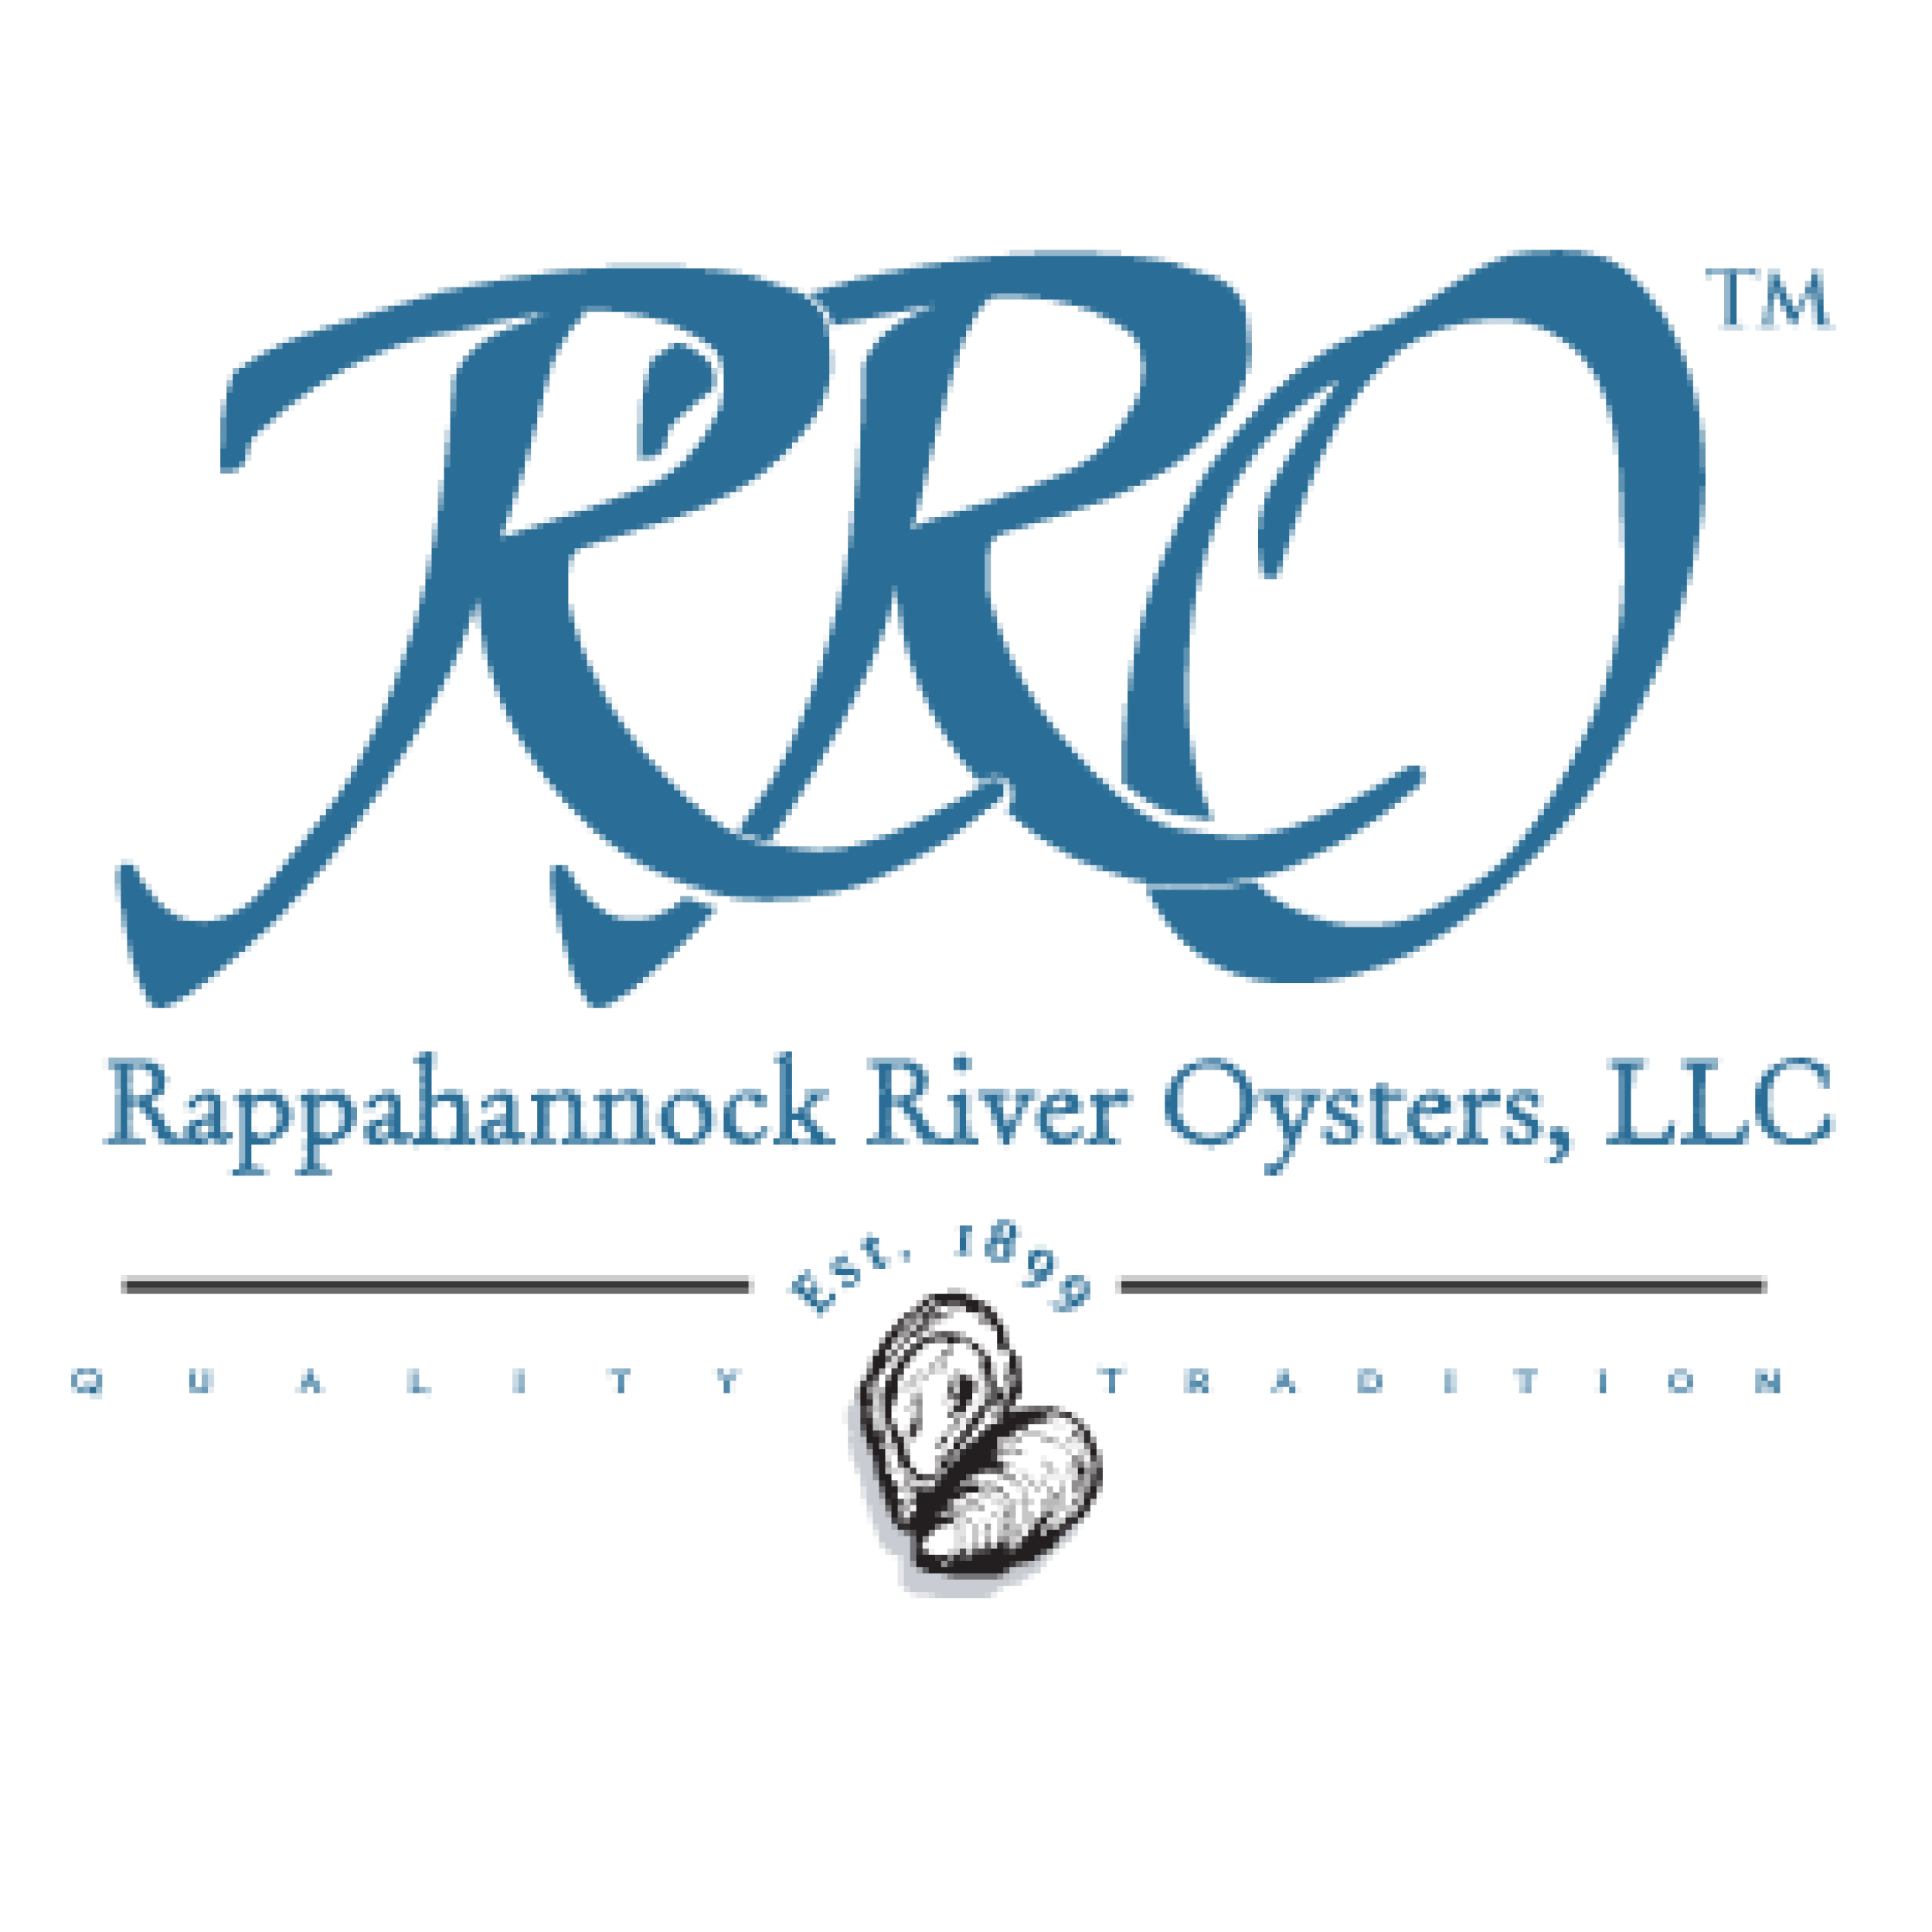 Rappahannock River Oysters